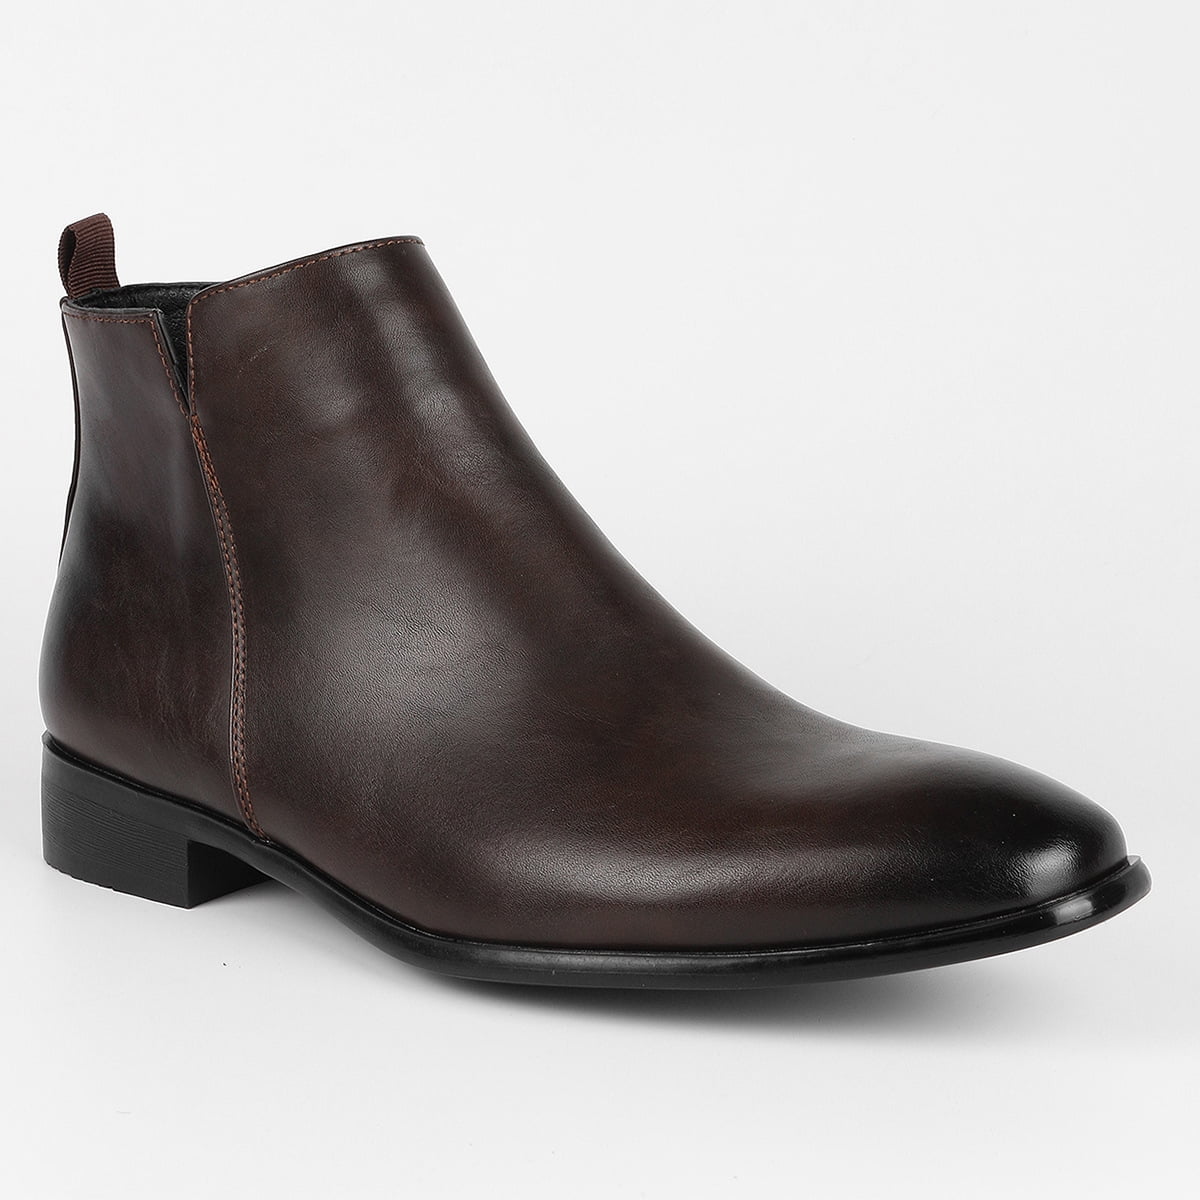 Men's Suede Leather Chelsea Ankle Boots - Walmart.com